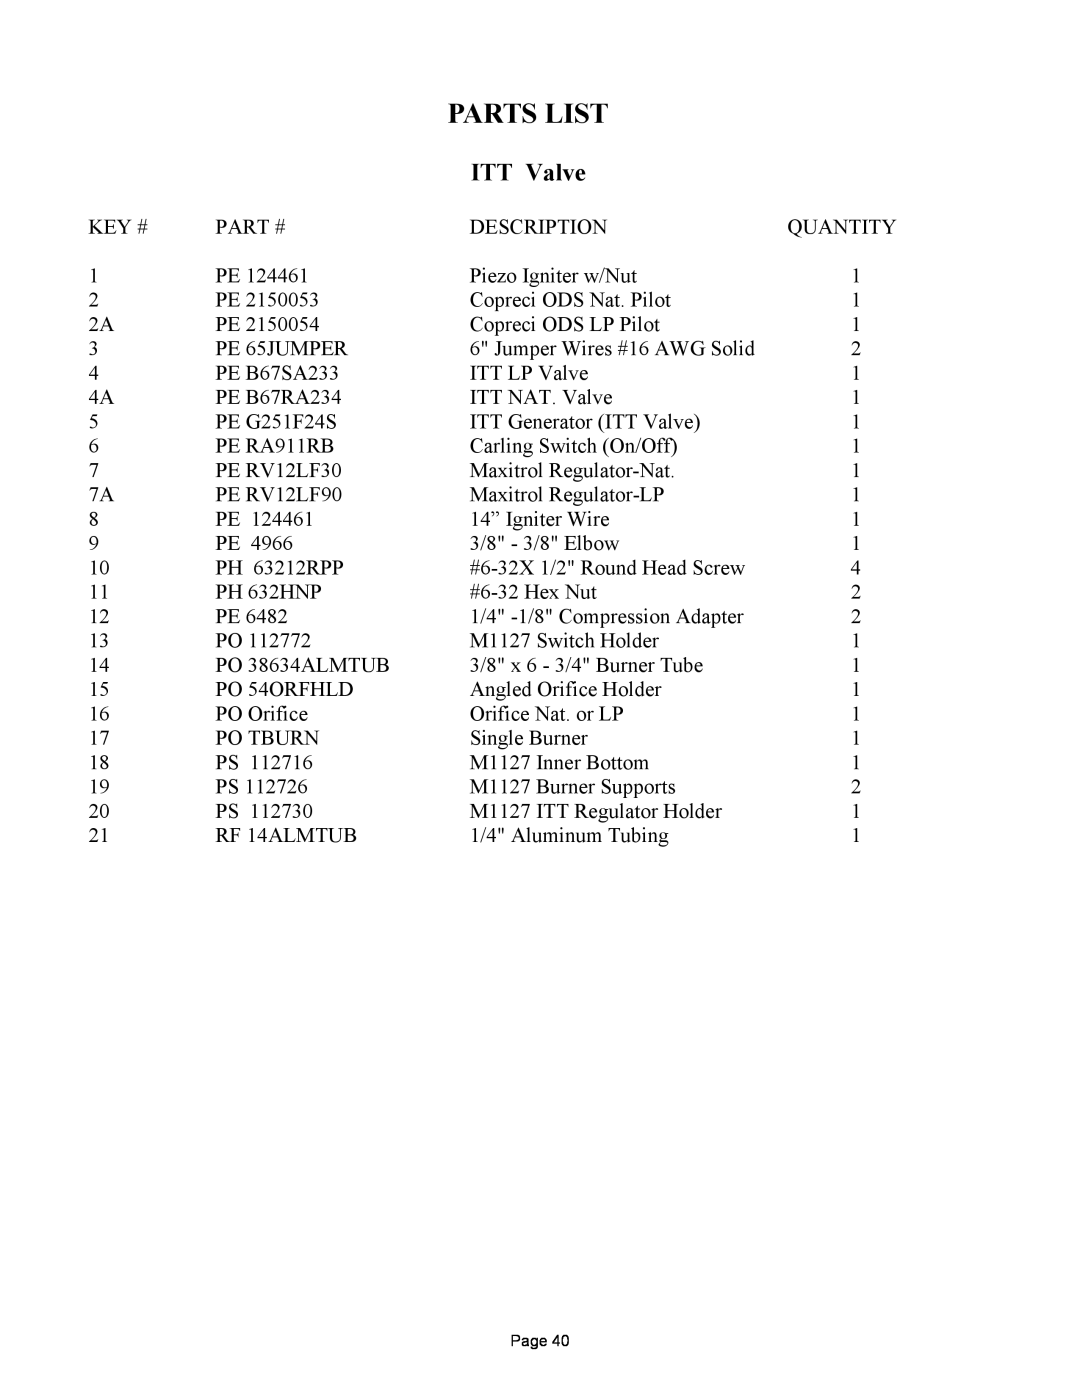 New Buck Corporation MODEL FP-327-ZC manual ITT Valve, Parts List 